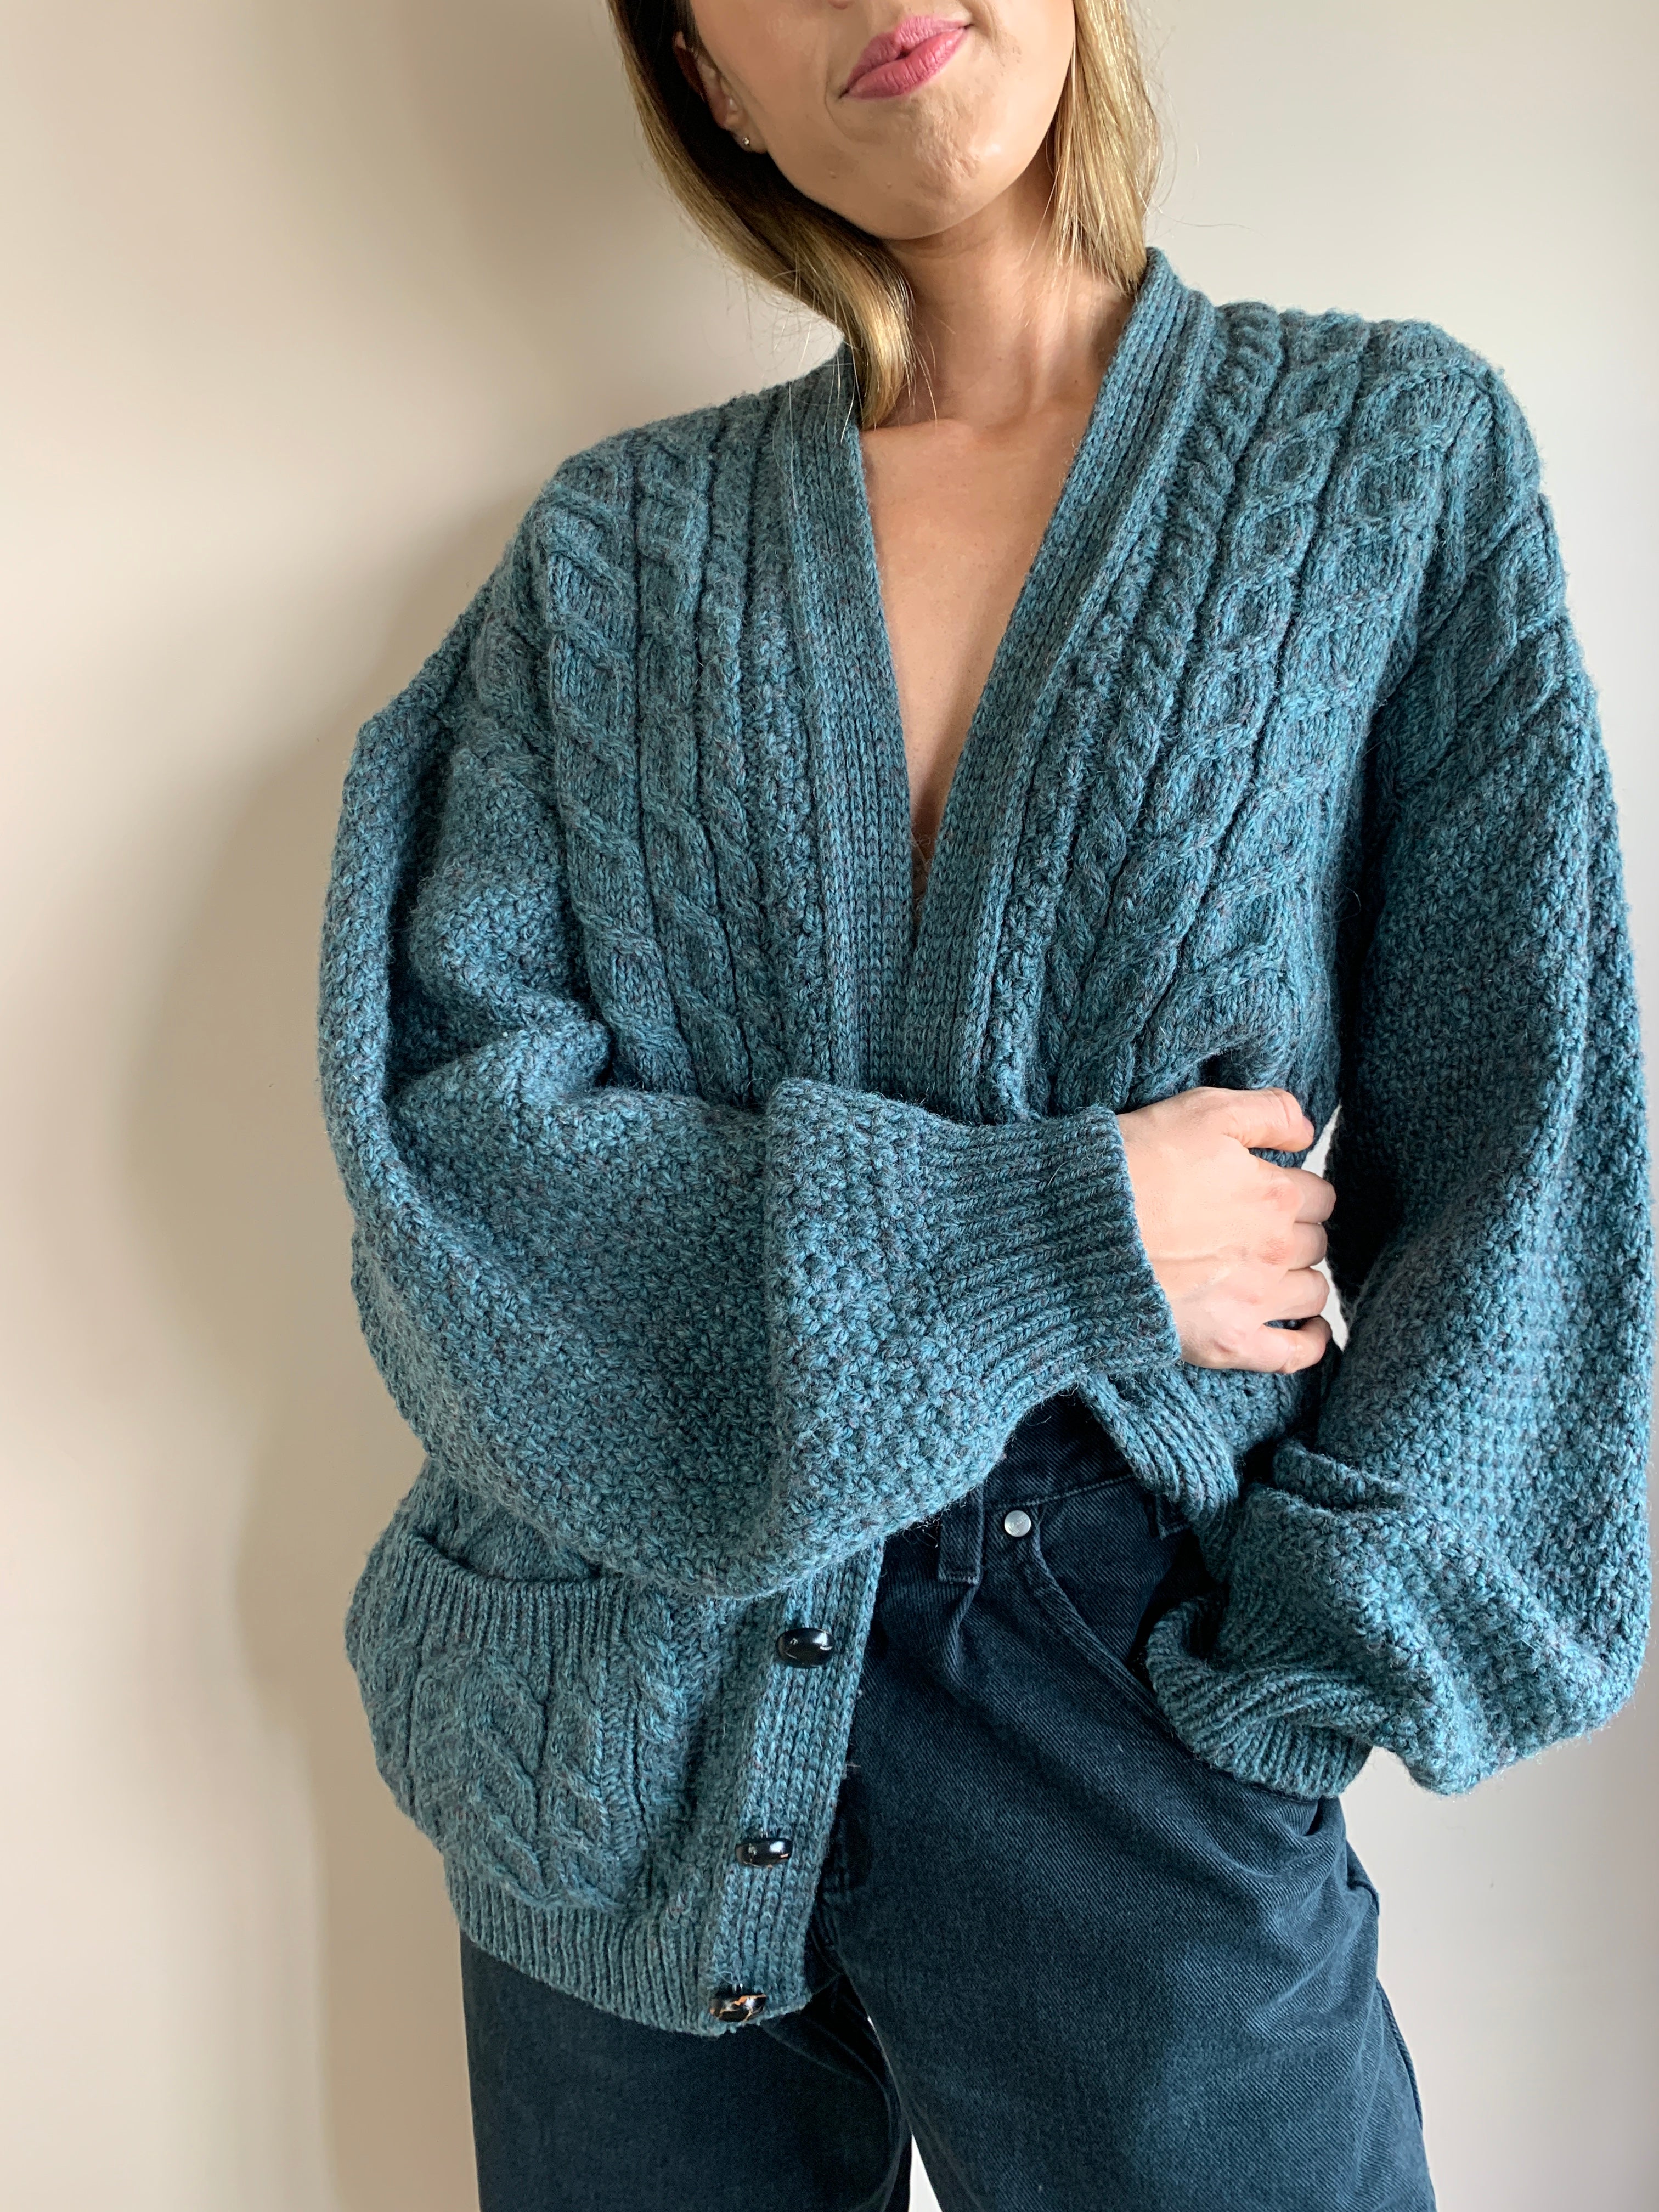 Vintage Aran knitted cardigan